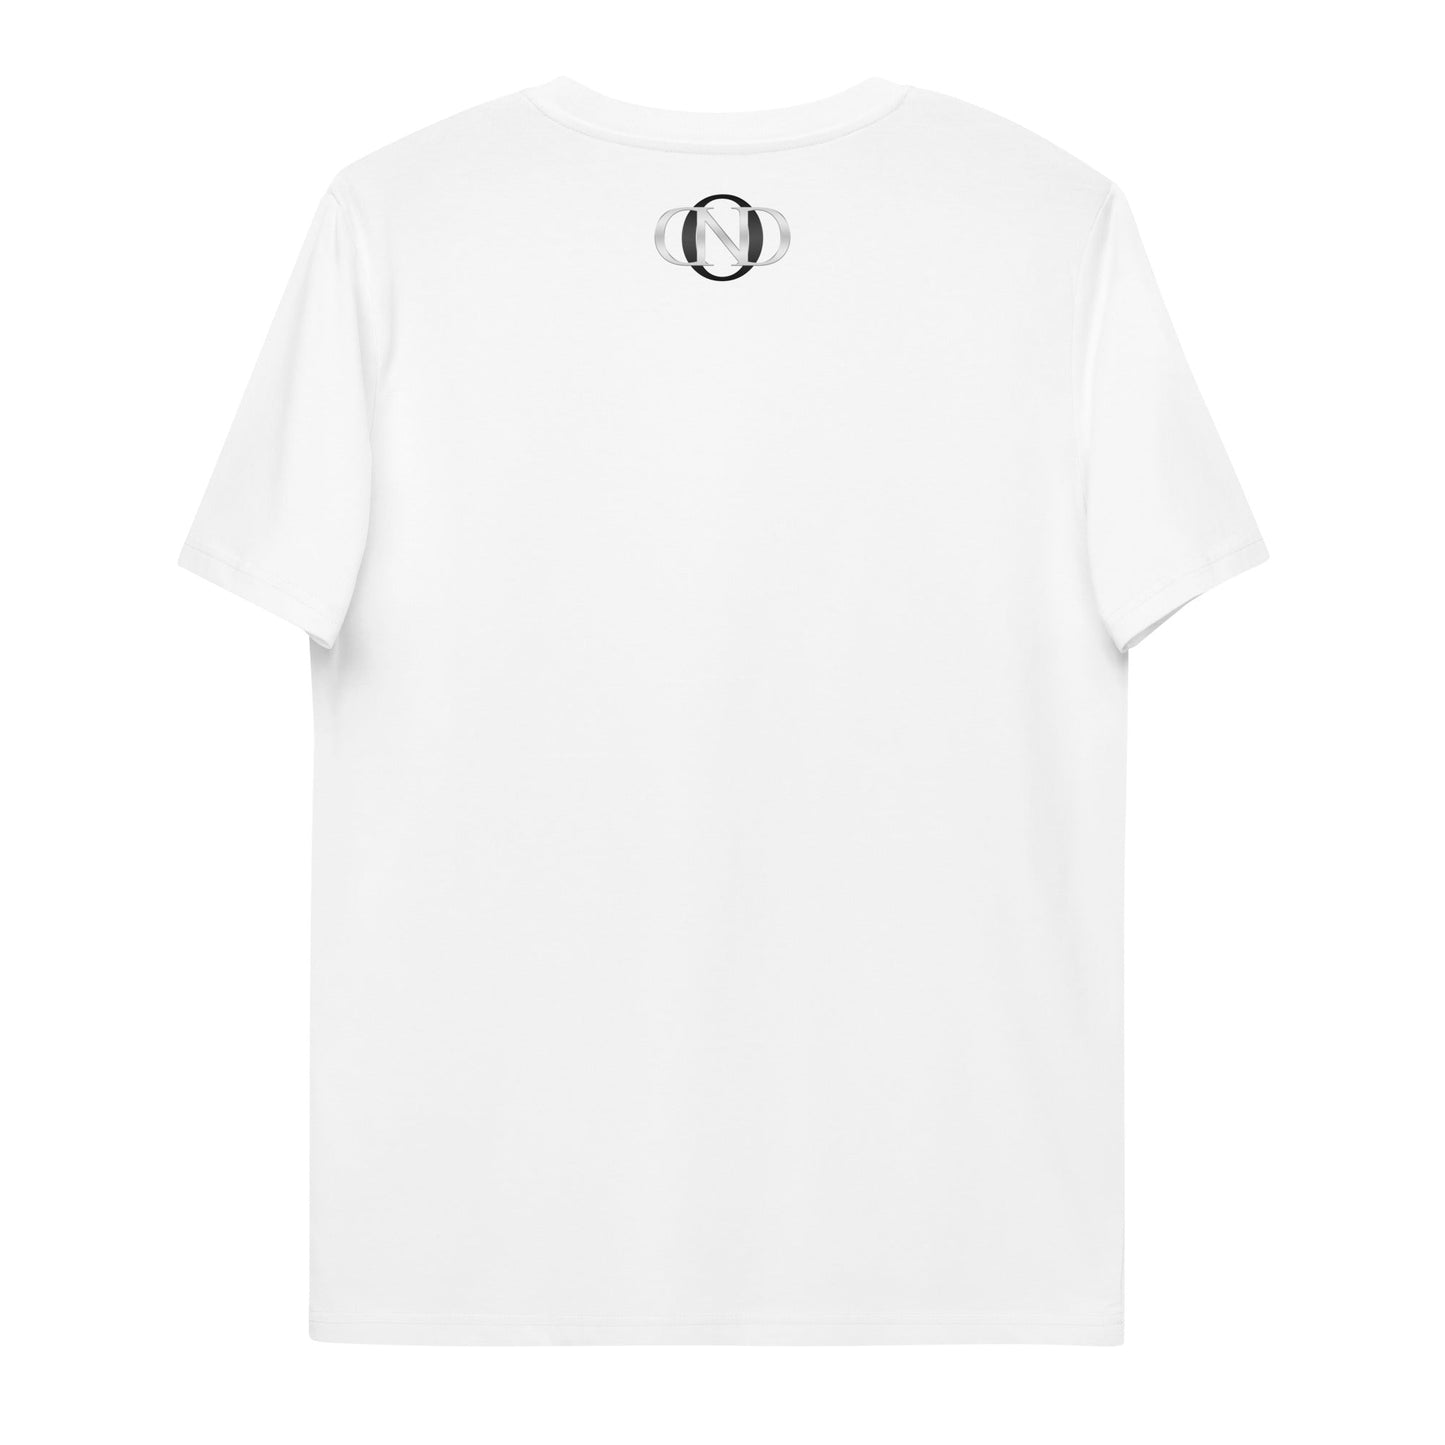 24 Neduz Designs Unisex Socialliberalerna Framtid T-Shirt -